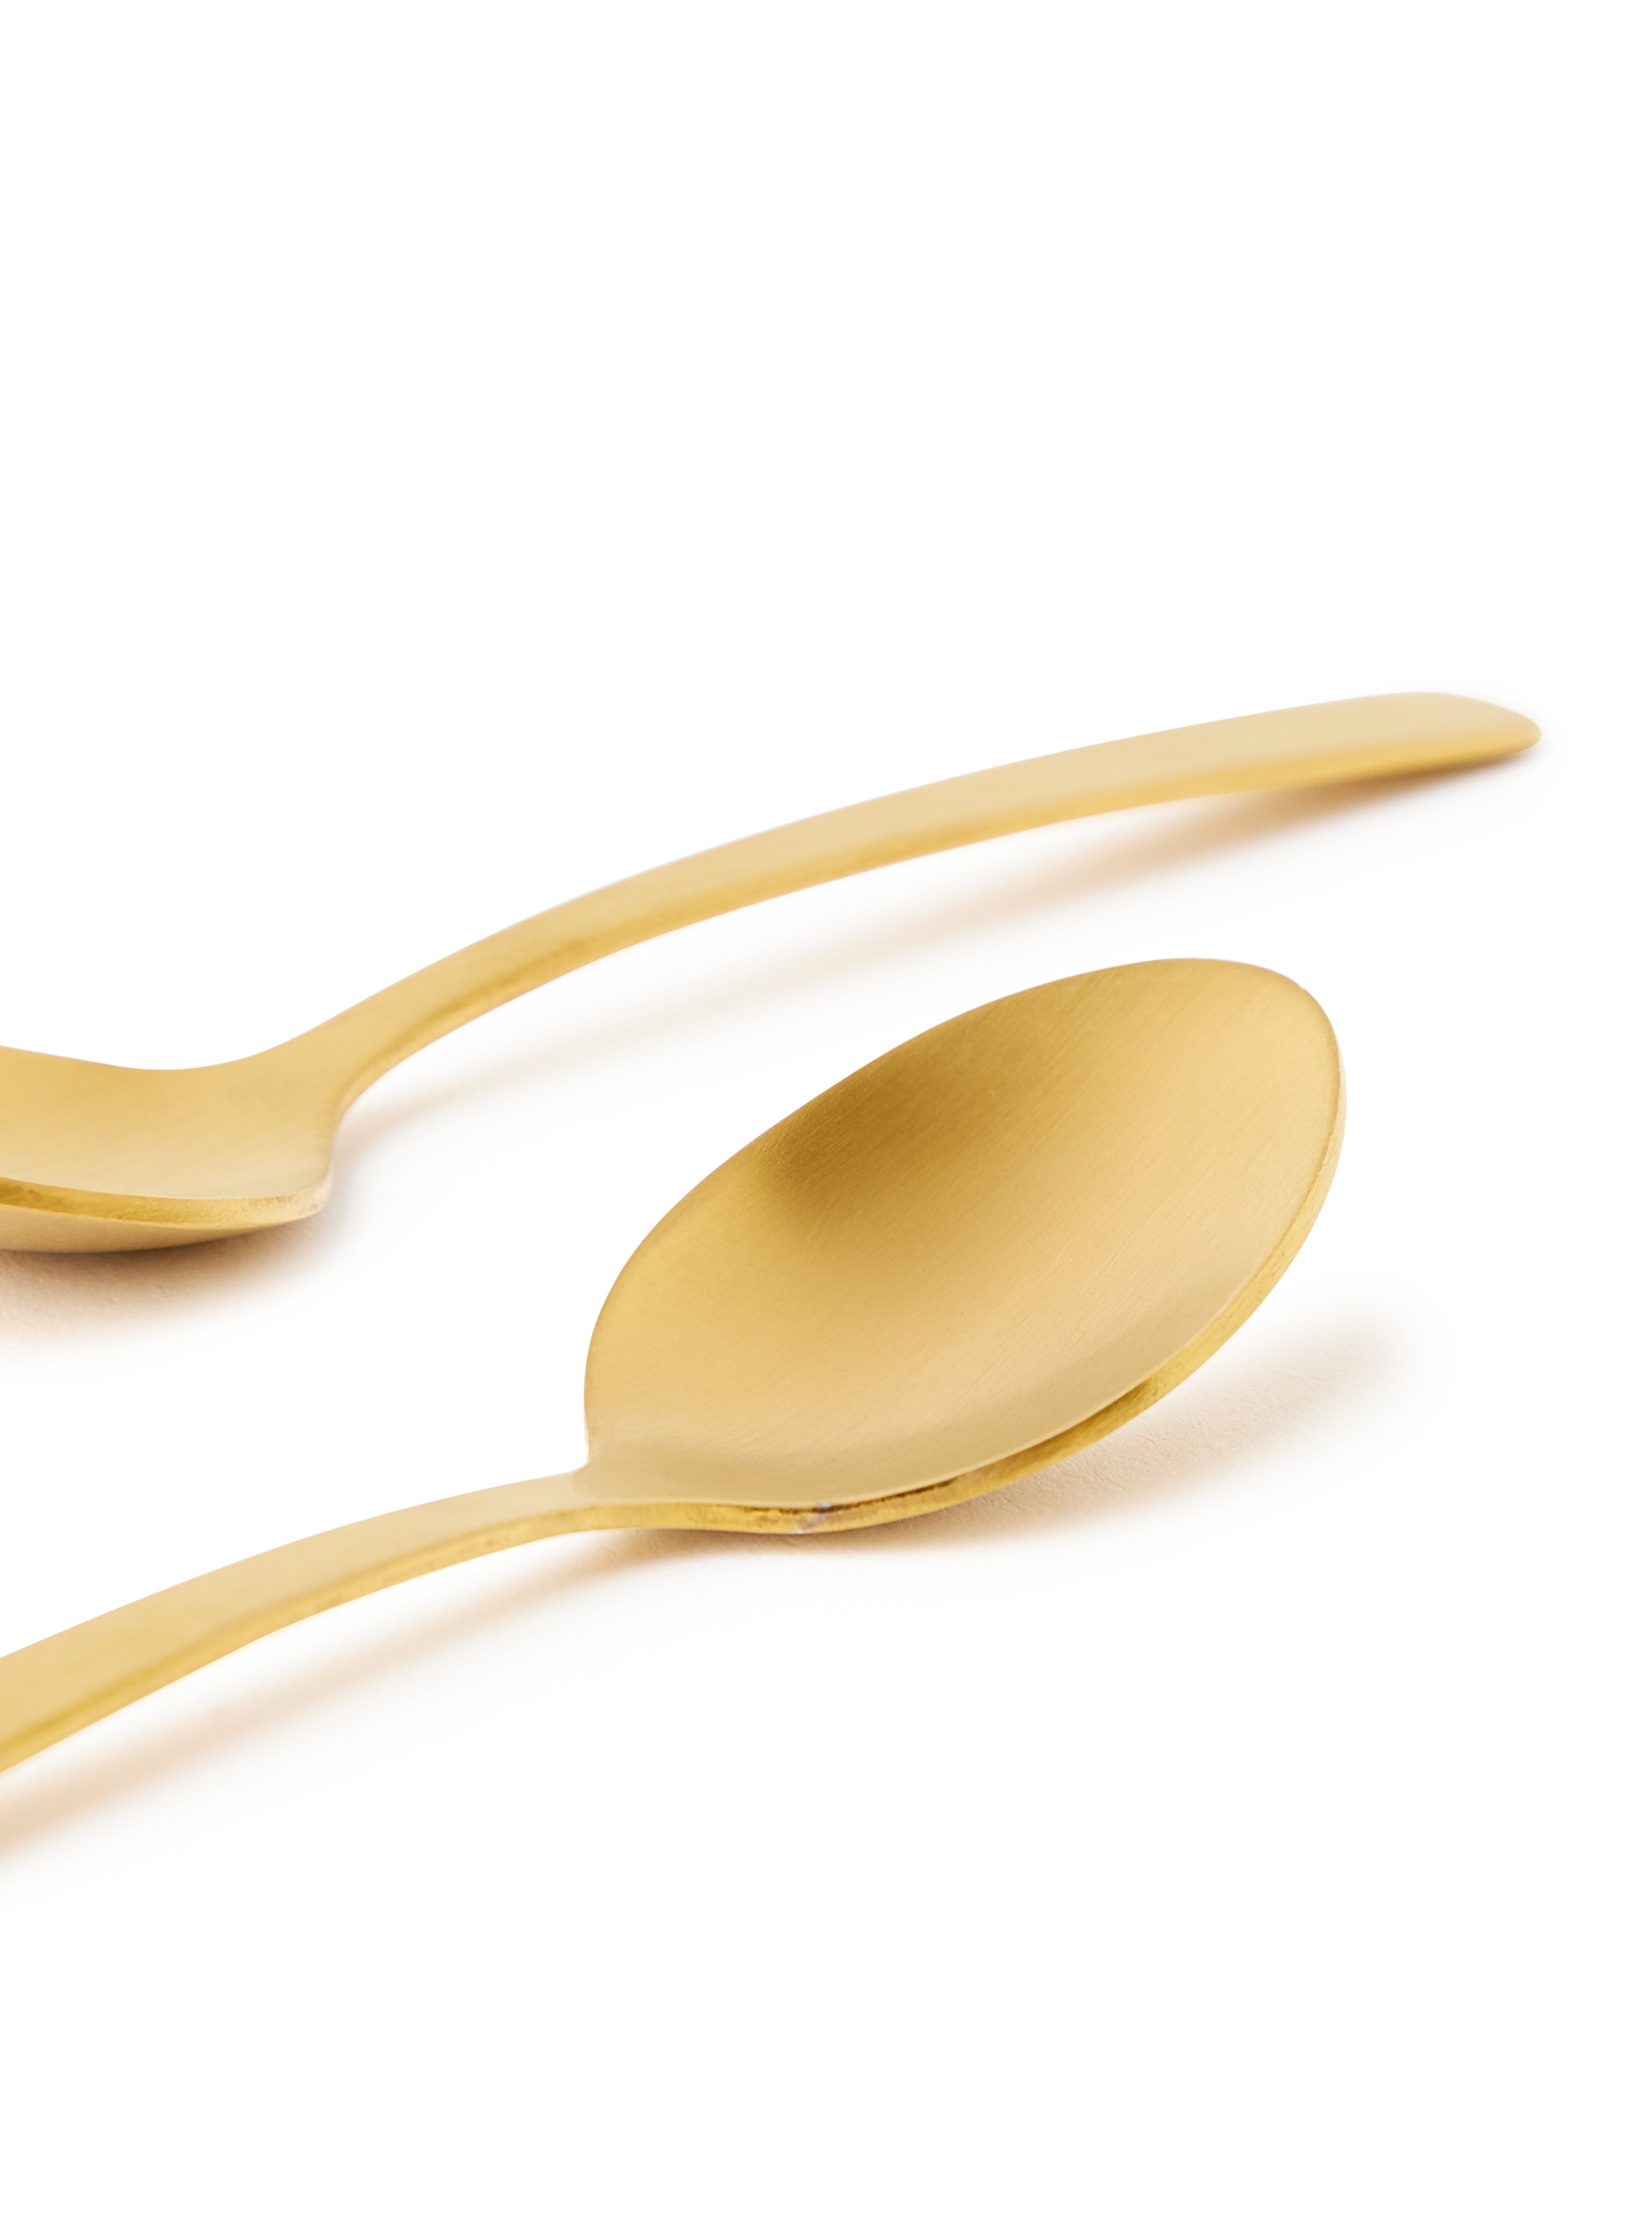 6 Piece Teaspoons Set - Made Of Stainless Steel - Silverware Flatware - Spoons - Spoon Set - Tea Spoons - Serves 6 - Design Gold Sail 